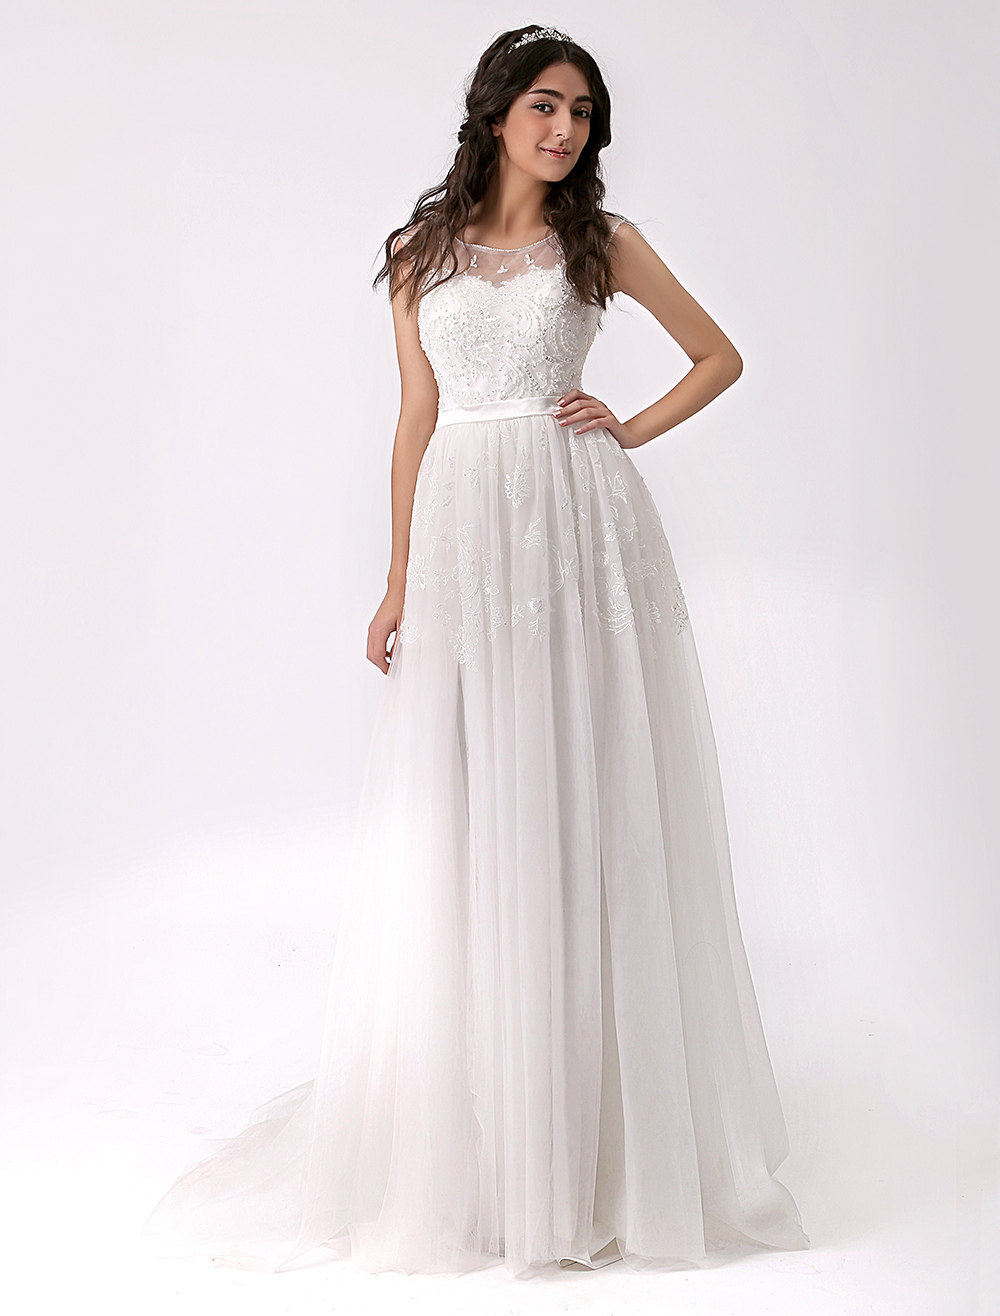 Beaded Side Slit Lace Wedding Dress With Illusion Neckline